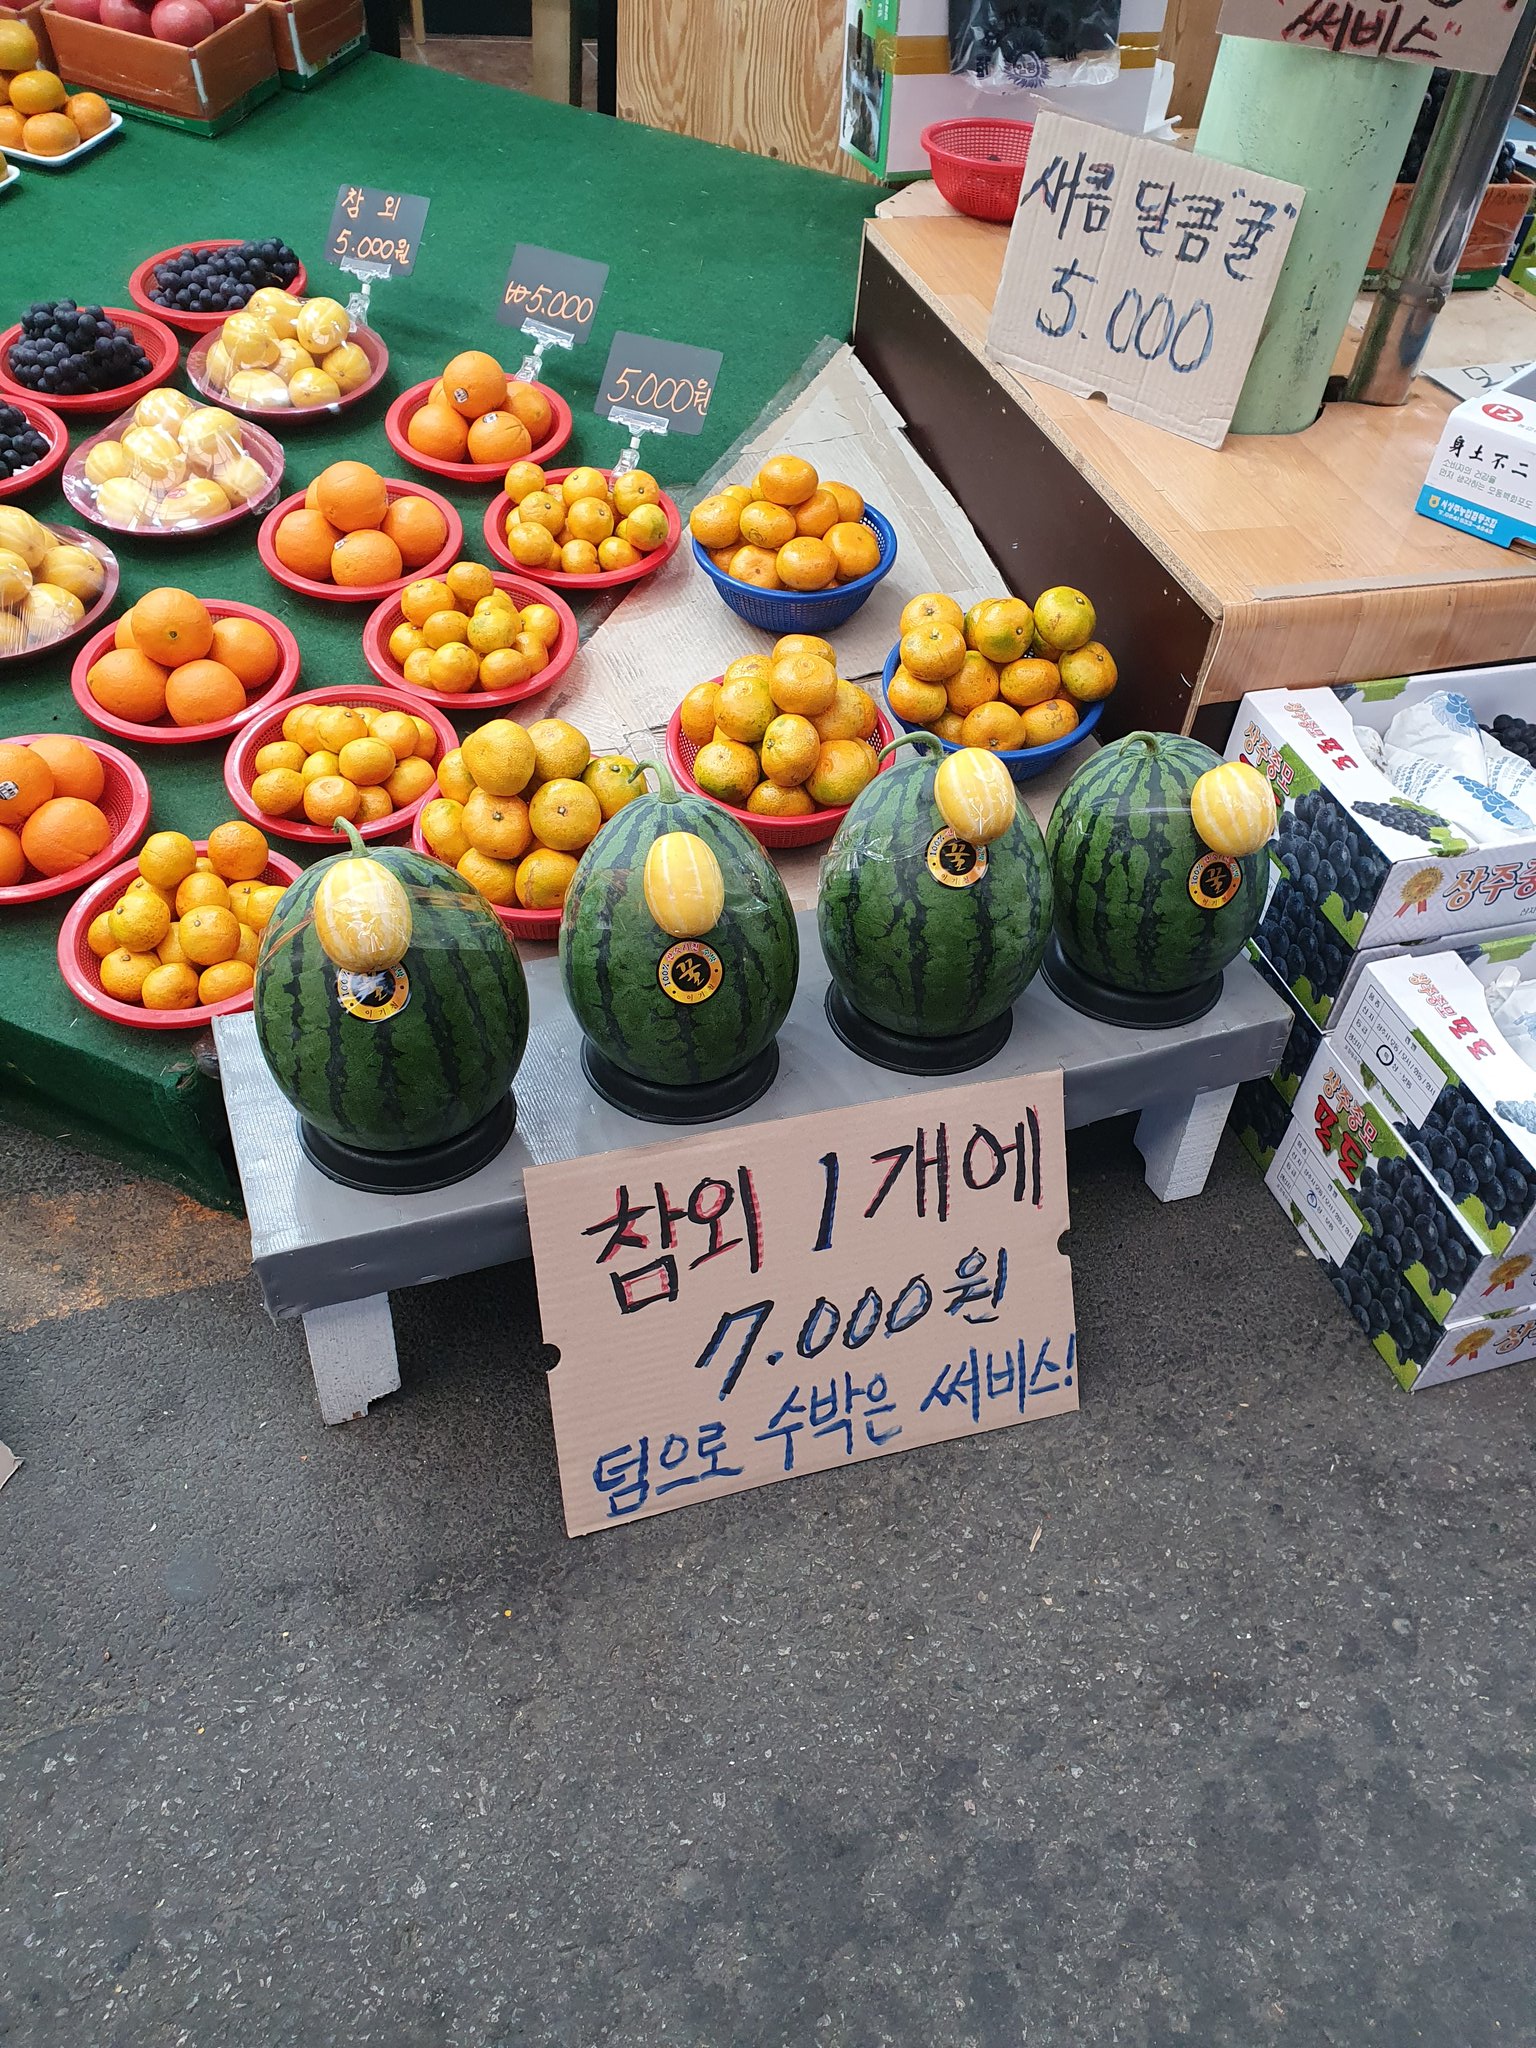 The Brave Blue Fruit Award for 7,000 won for a Korean melon.